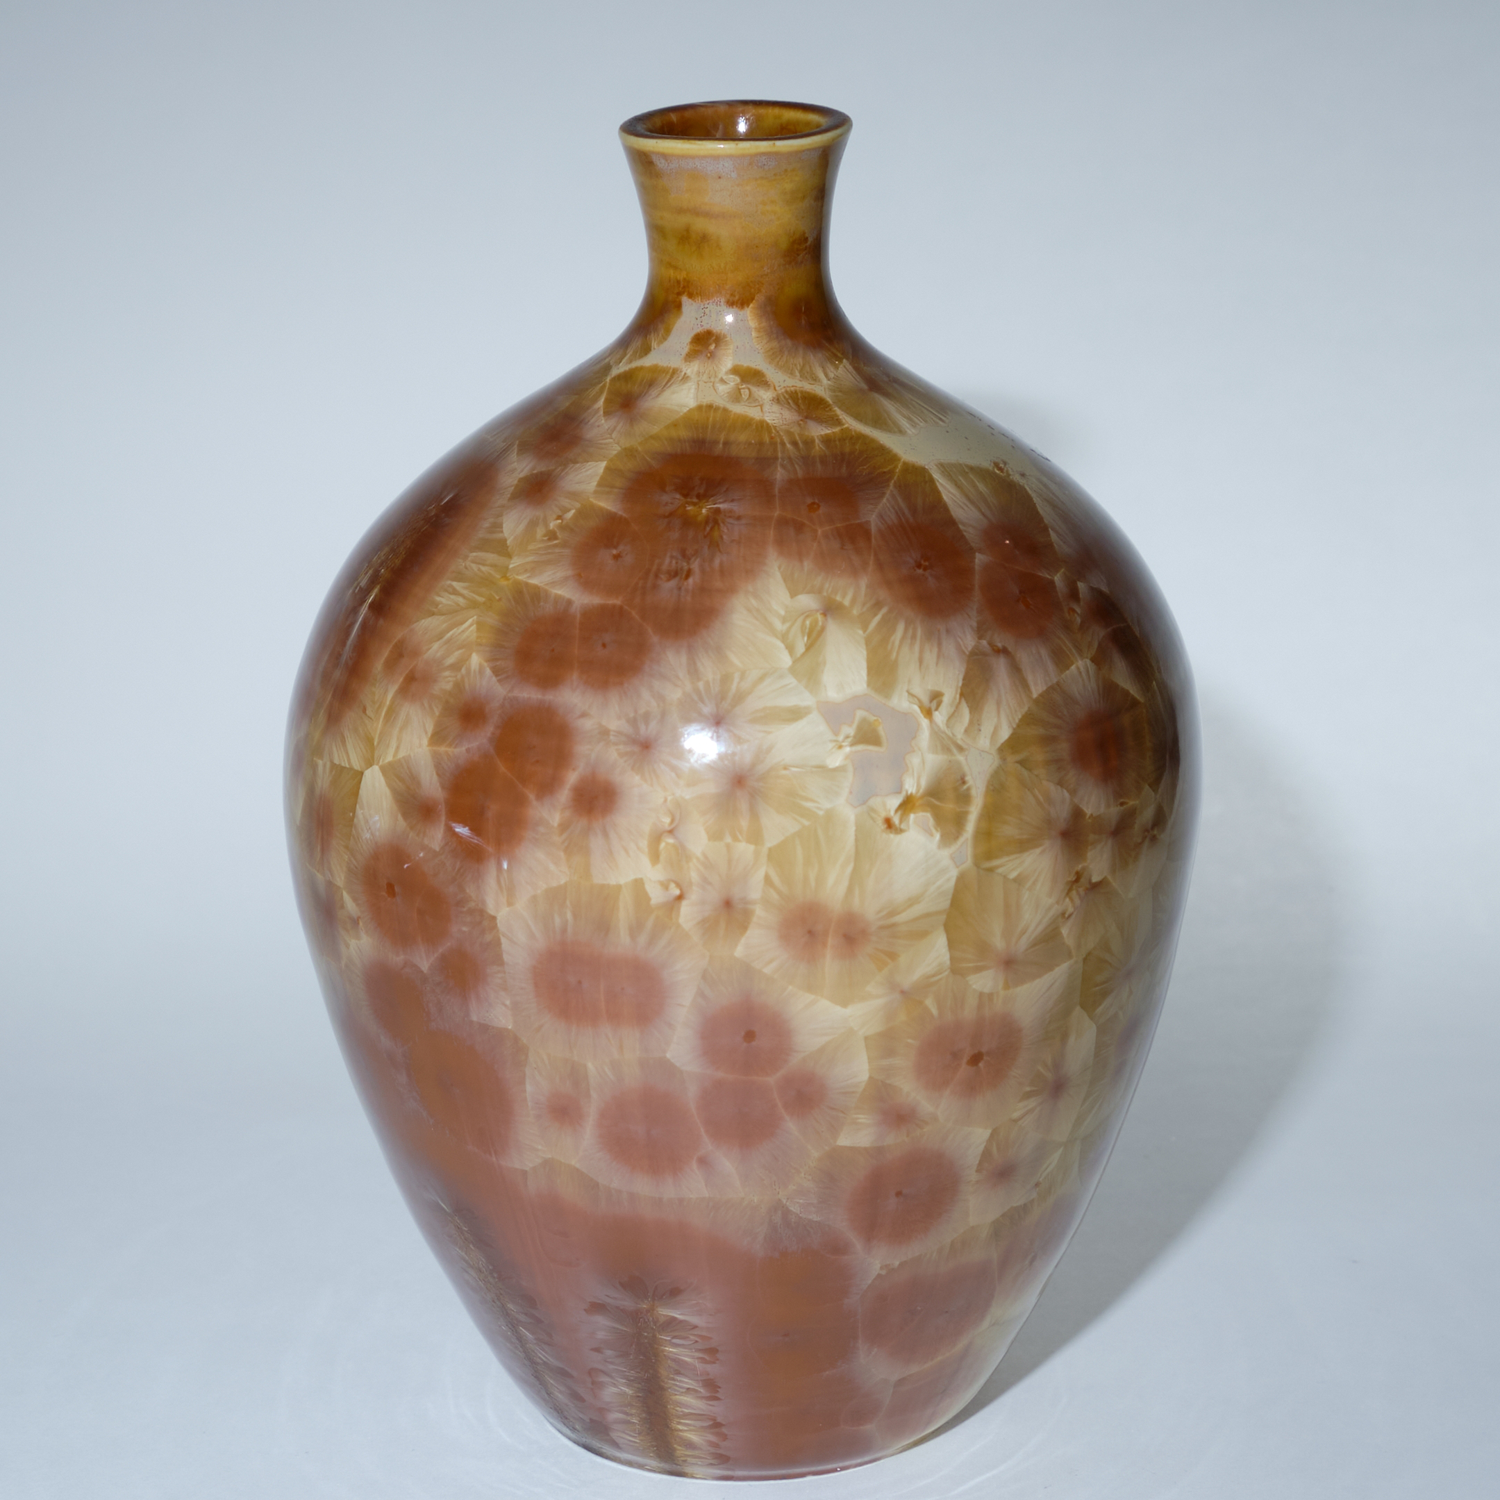 Yumiko Katsuya: Brown Vase Product Image 1 of 1